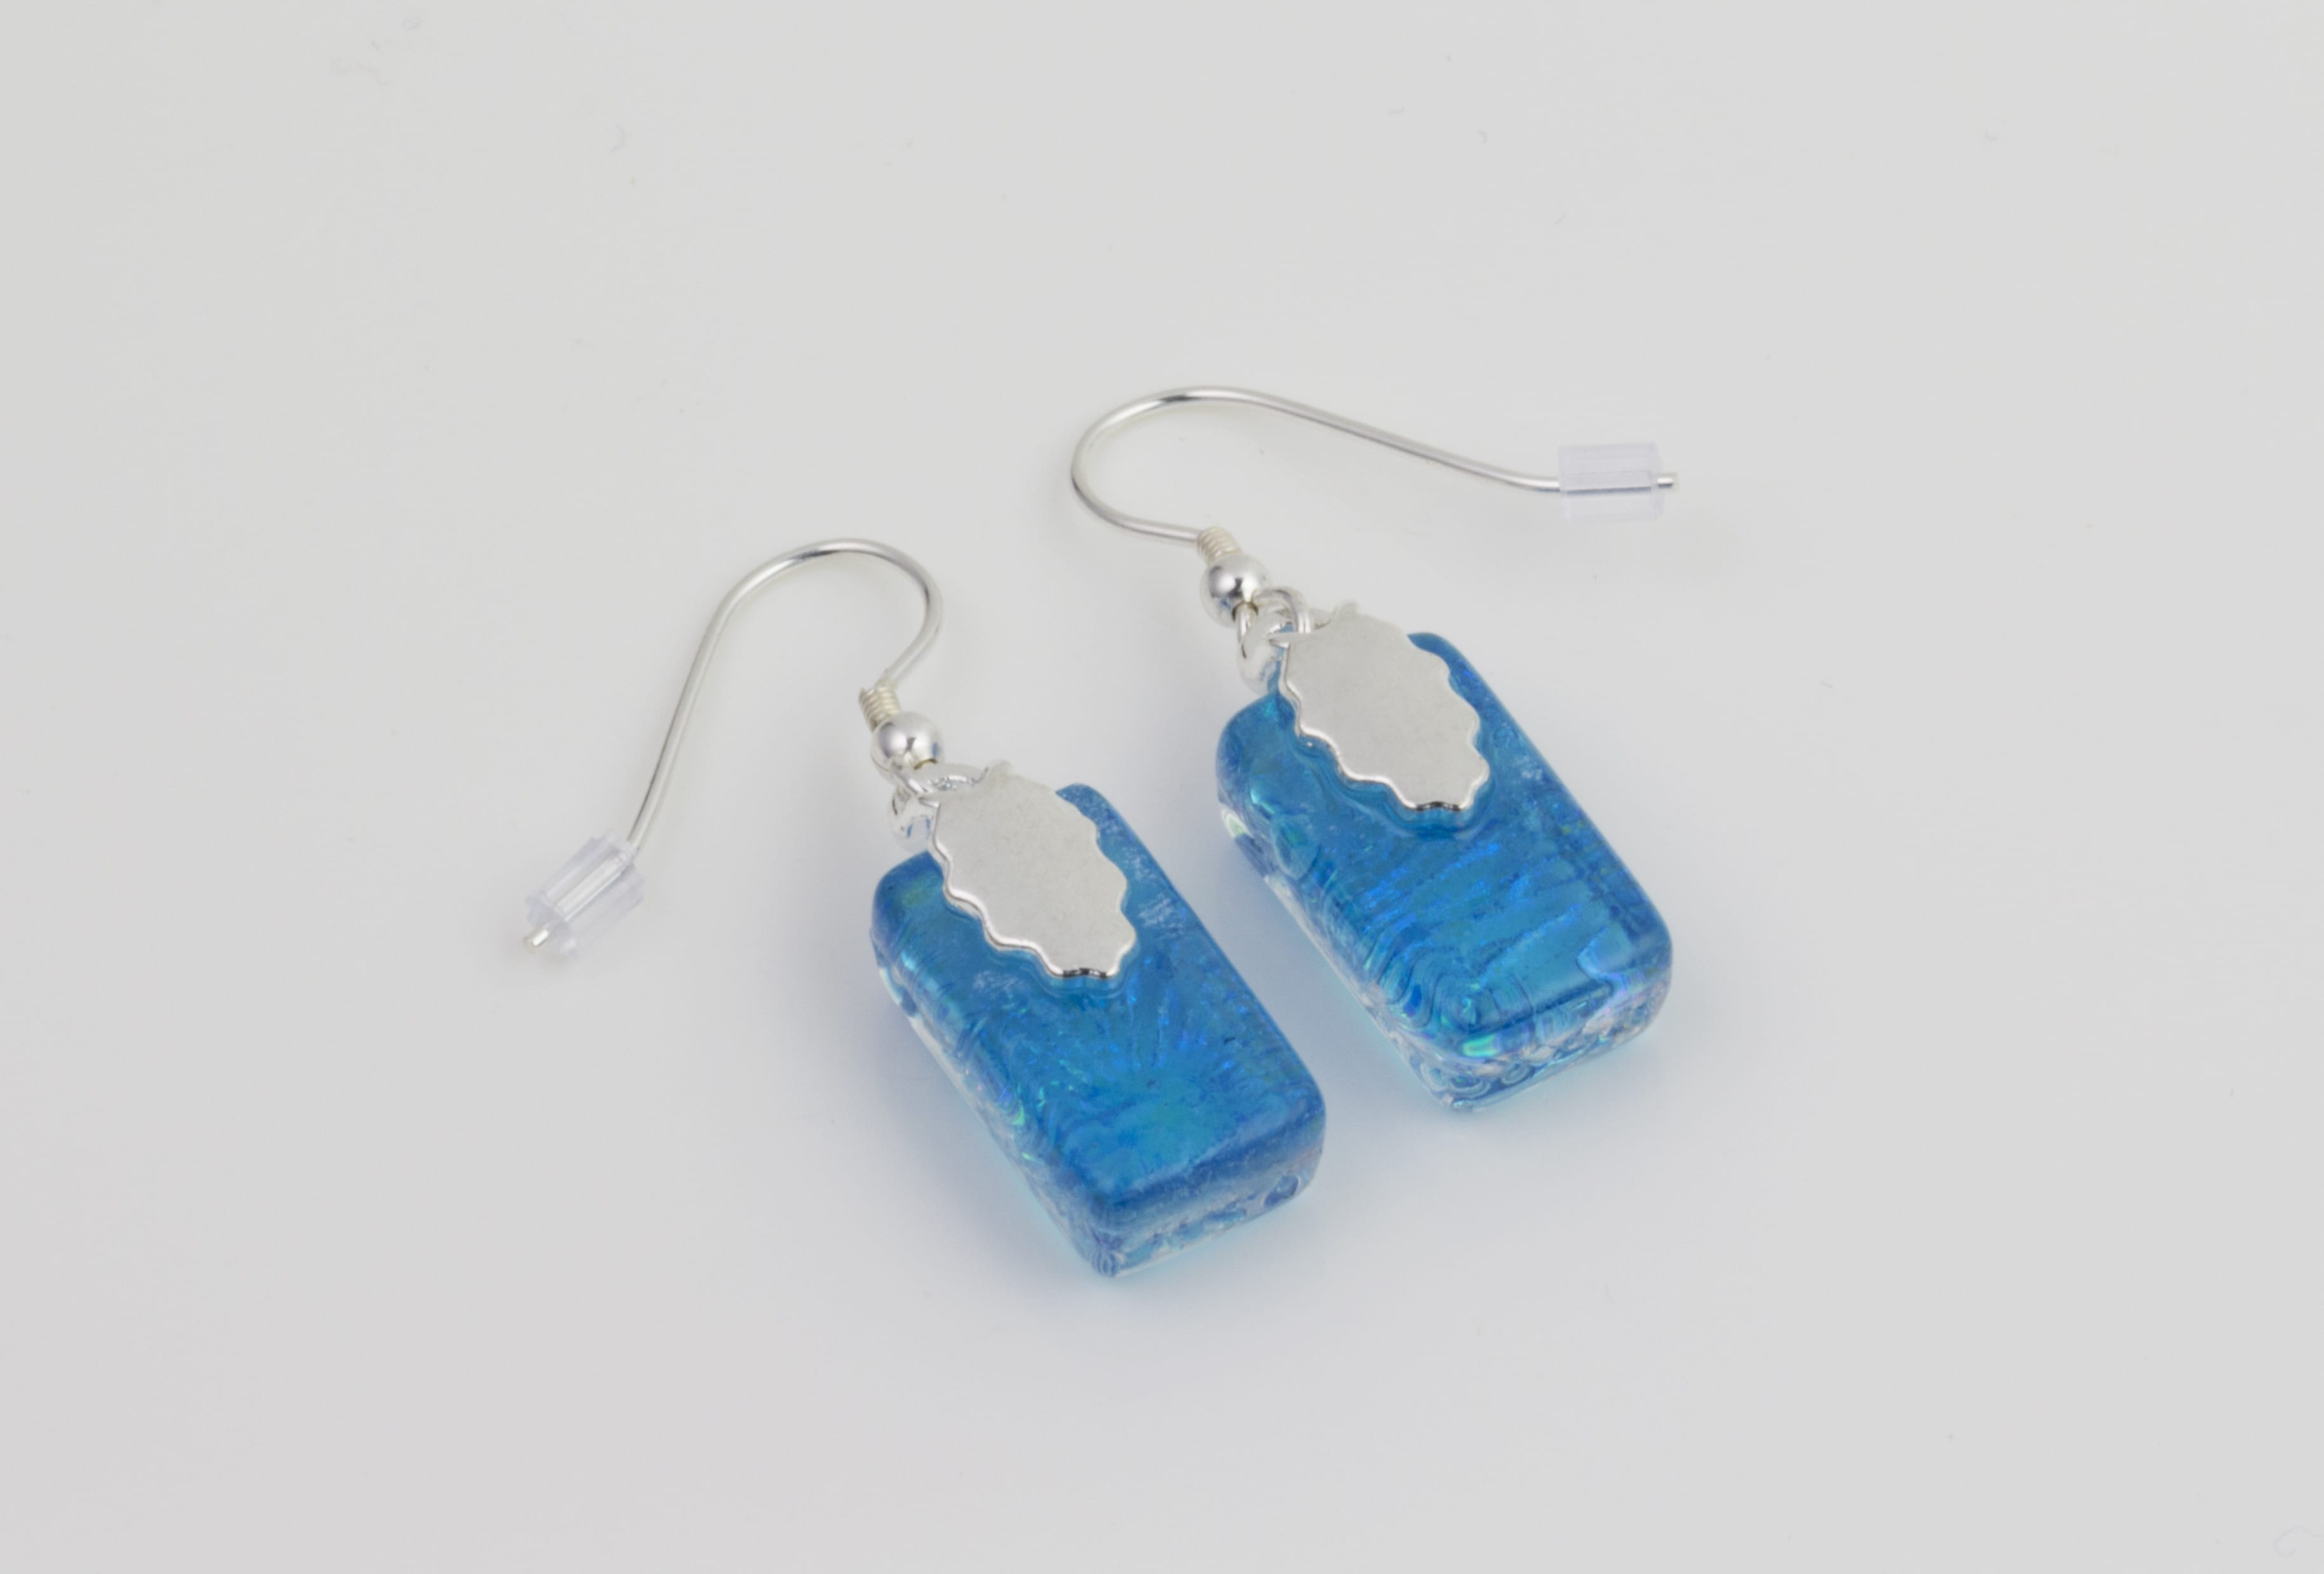 Dichroic glass jewellery, glass drop earrings, turquoise glass earrings with starburst pattern, art glass earrings, handmade in Shropshire, sterling silver hooks